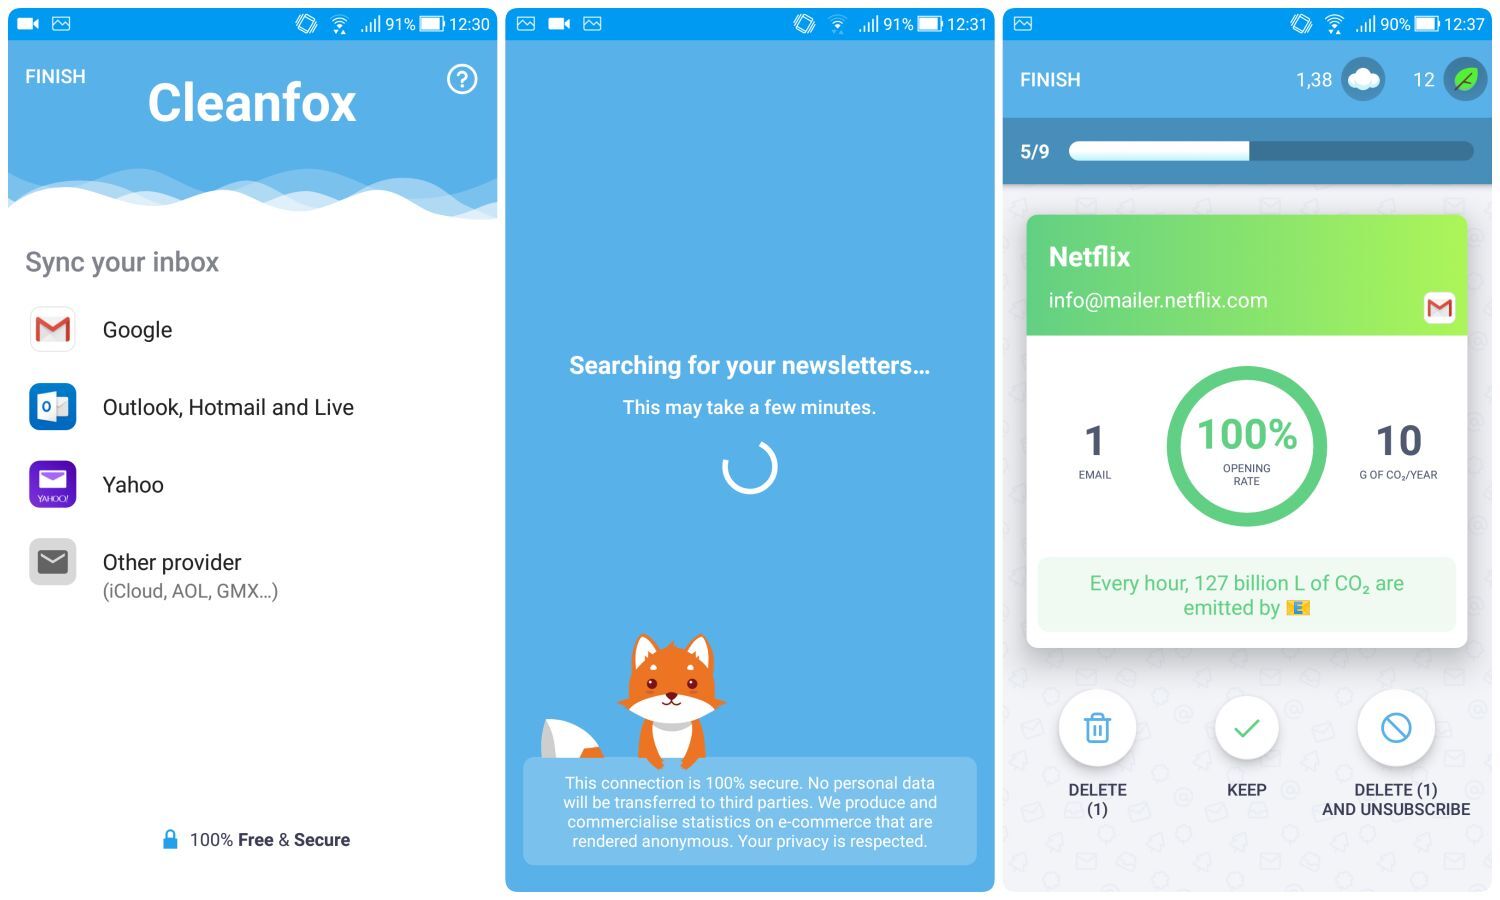 Cleanfox - Clean Your Inbox